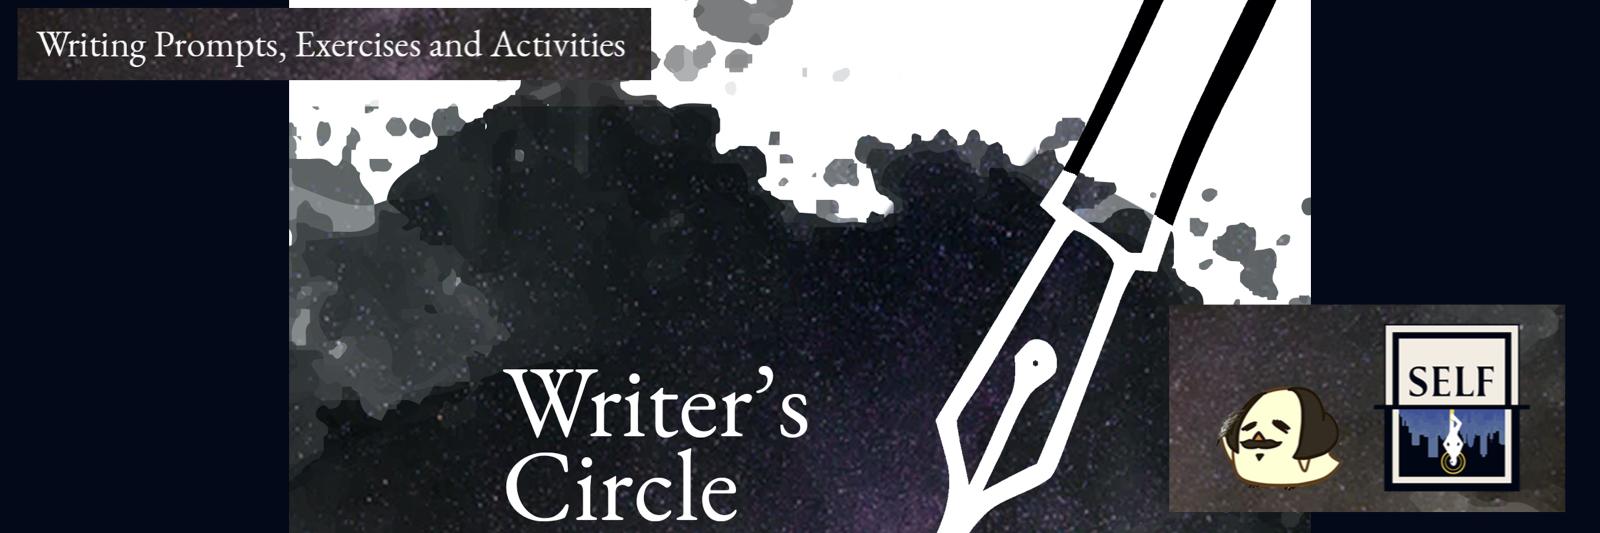 Feb 5: SELF Writers' Circle